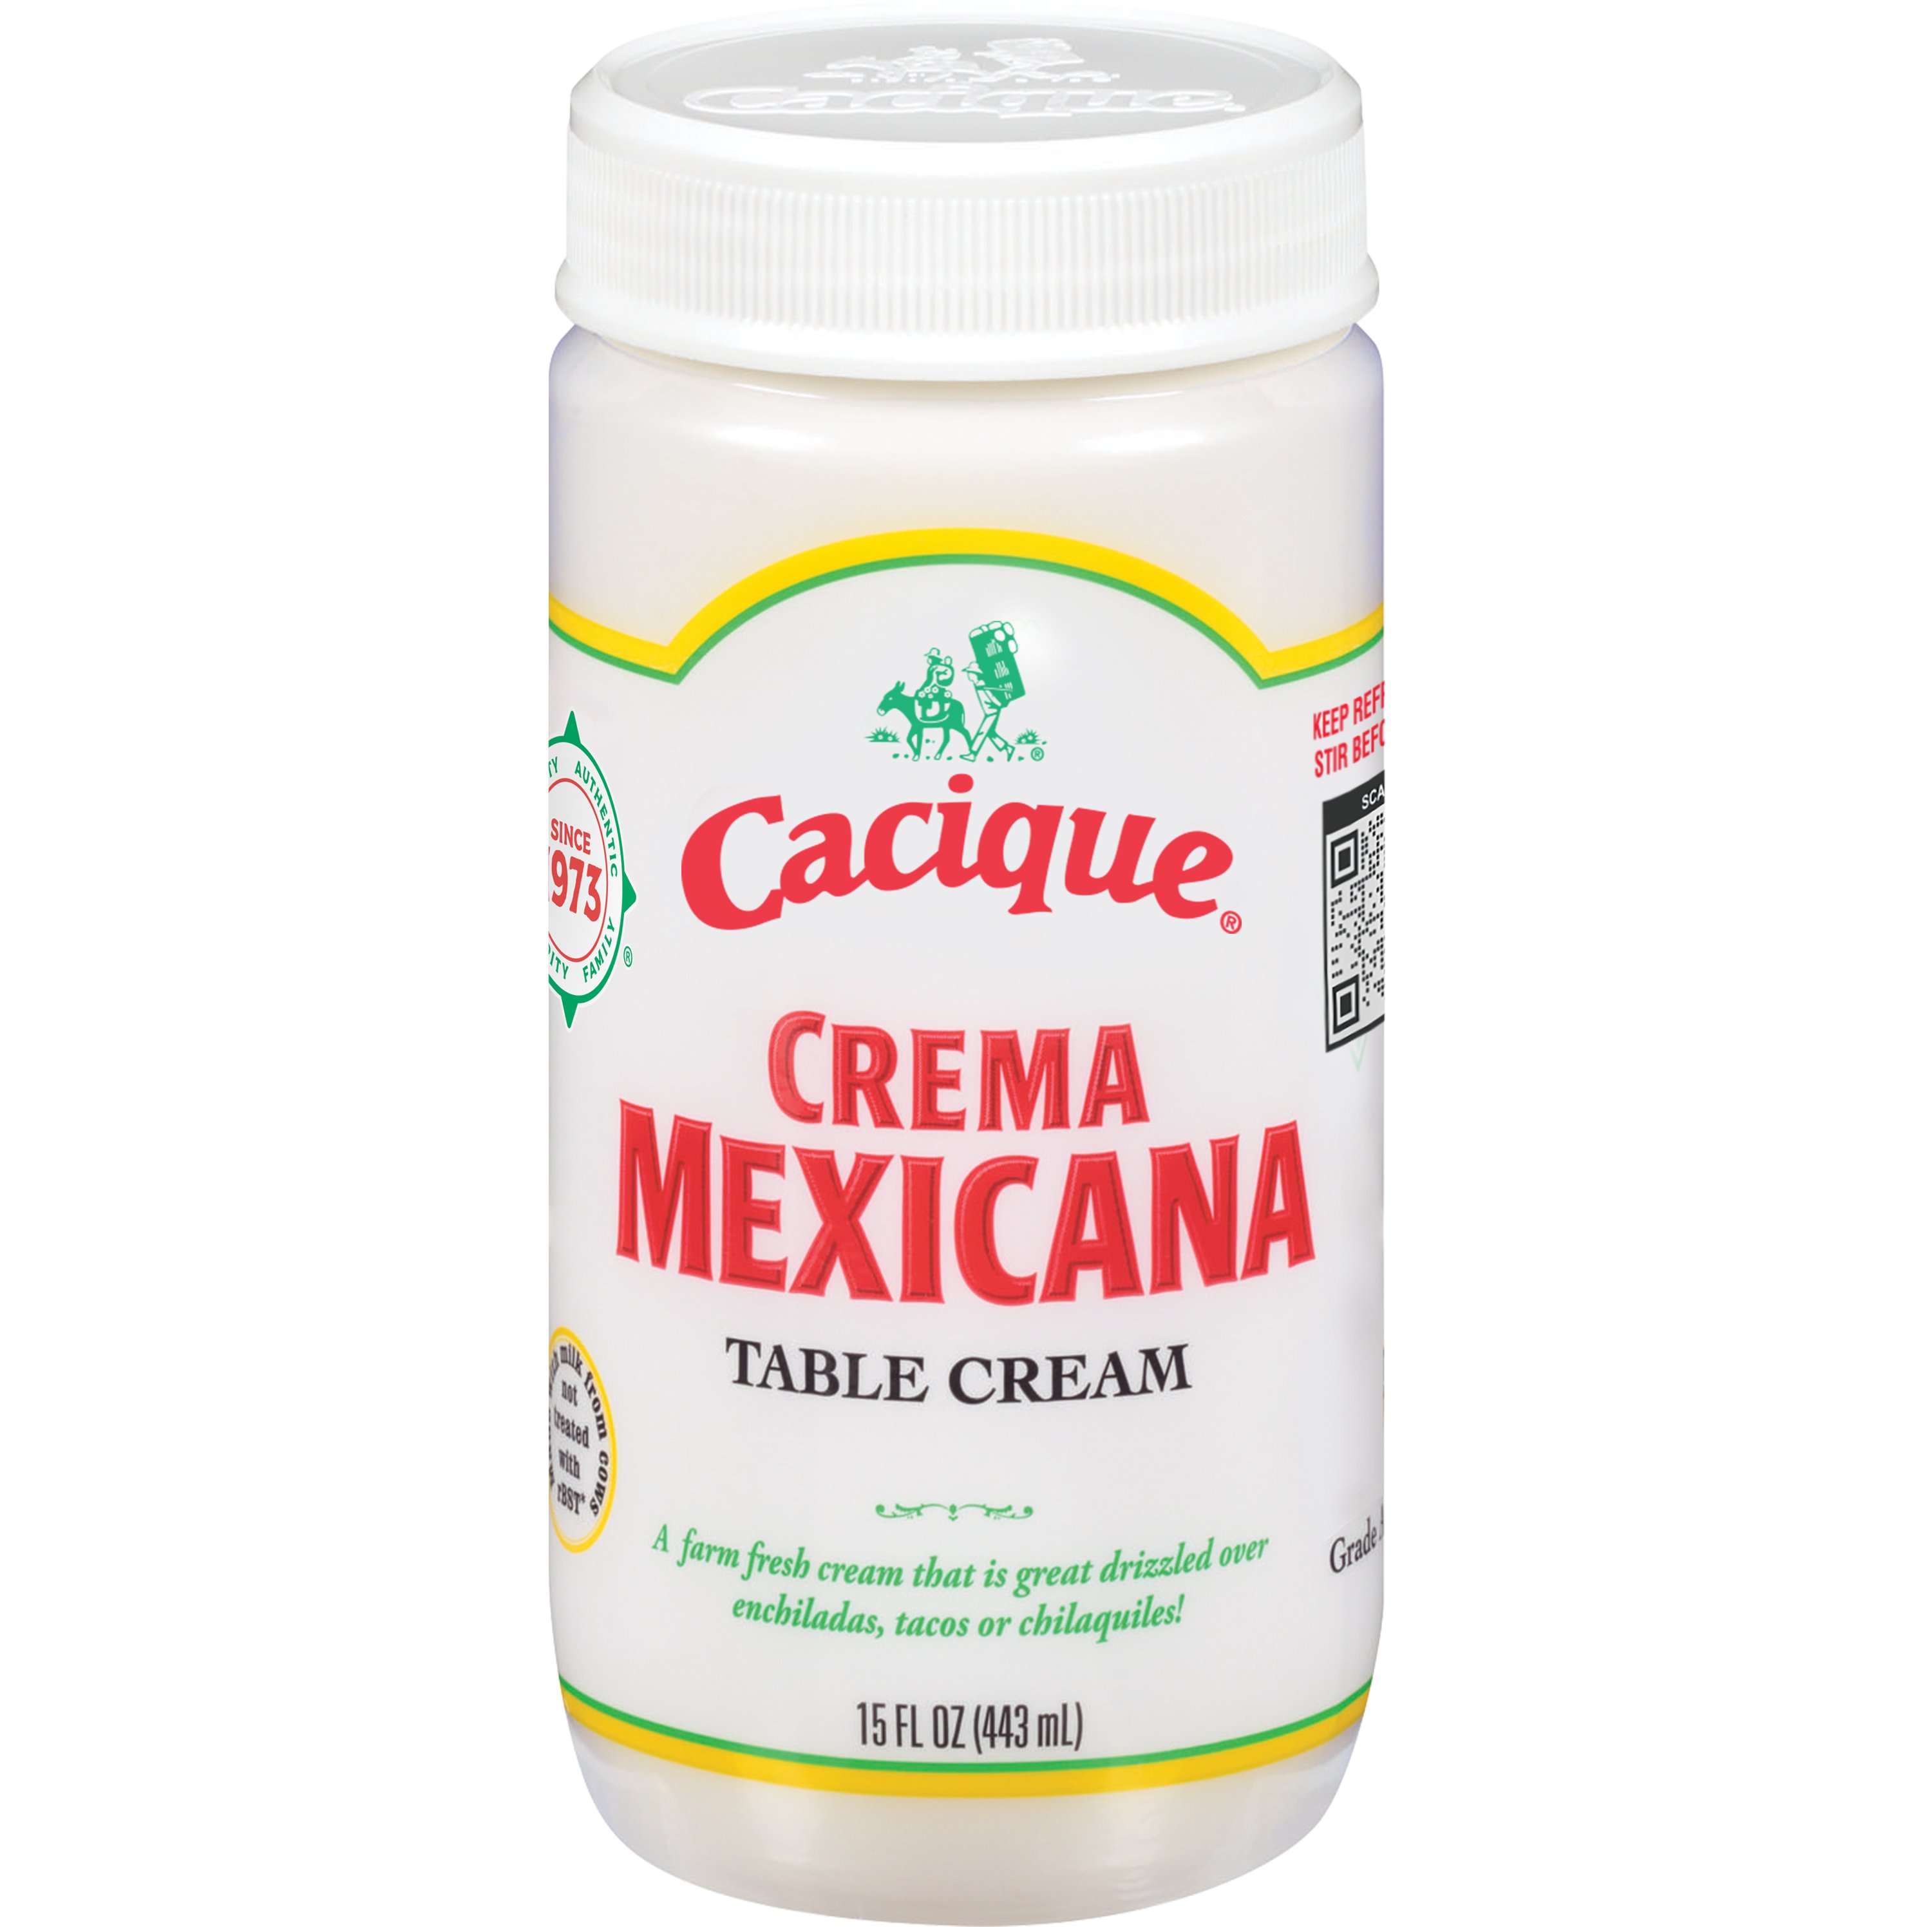 Cream Mexicana H-E-B Milk Crema Table - Shop Cacique at